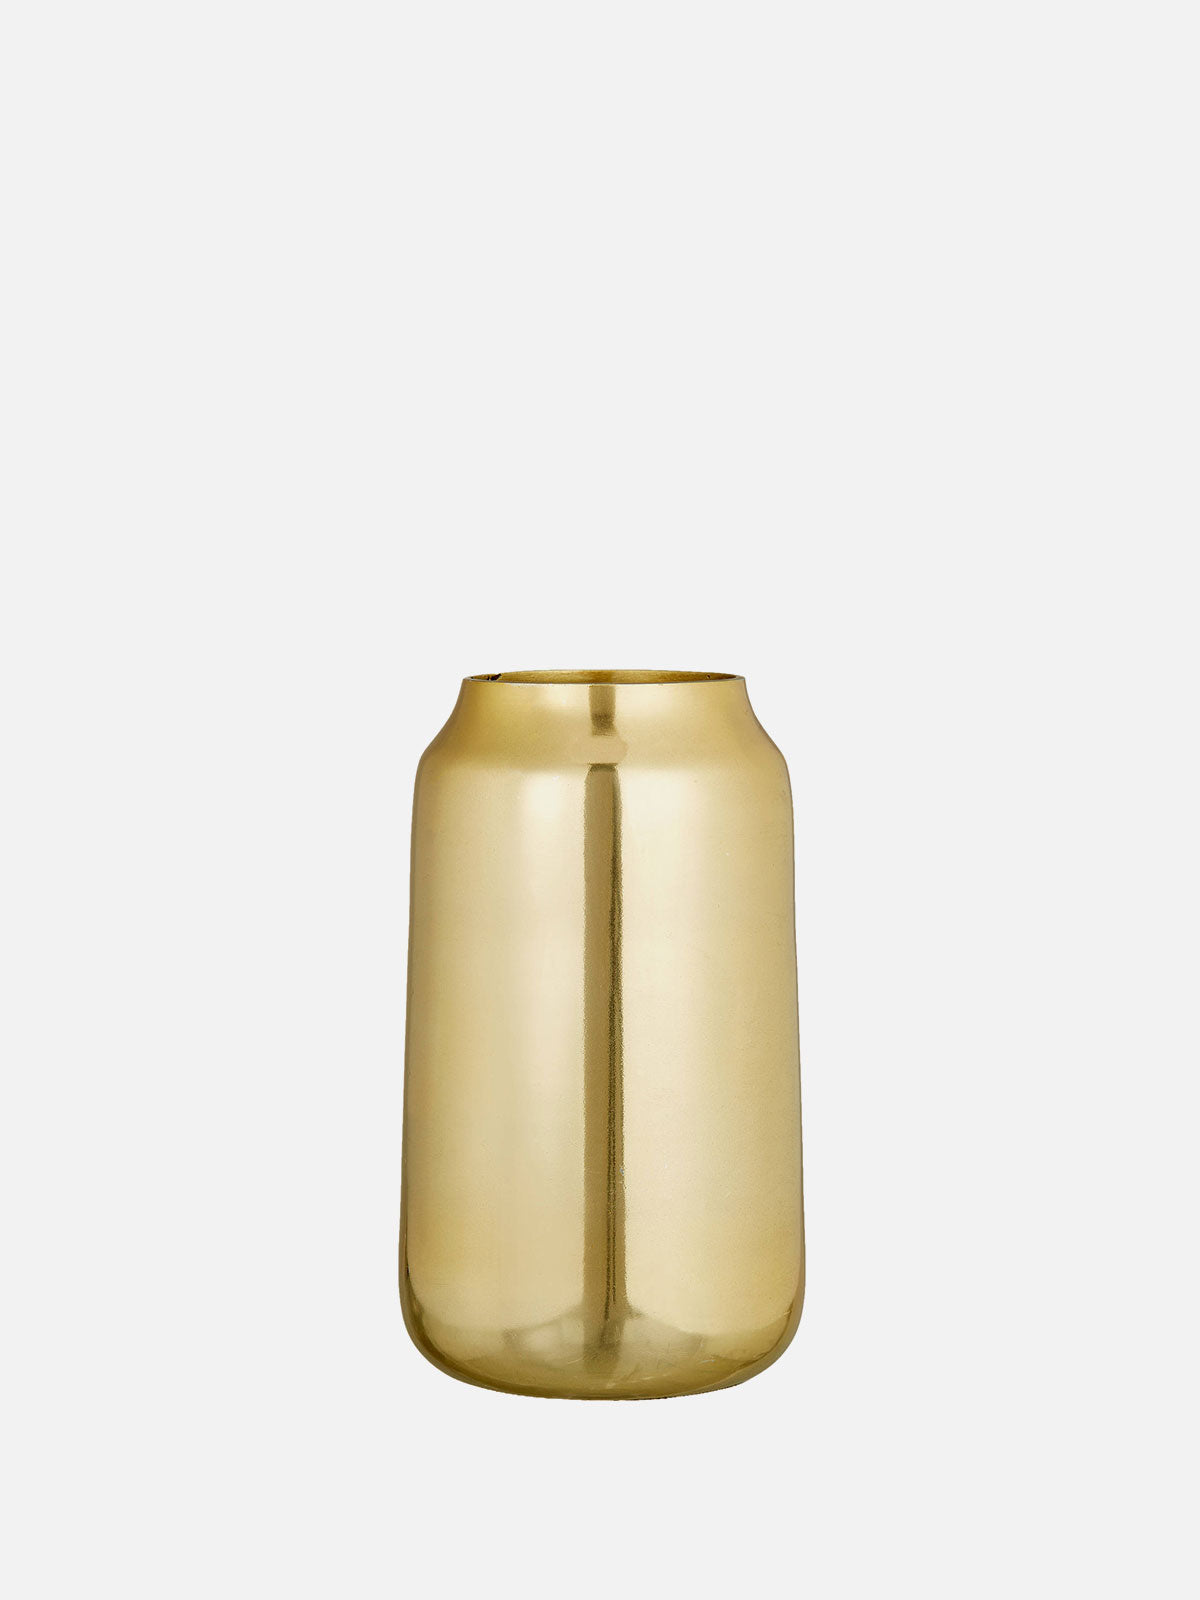 Brass Vase - Medium